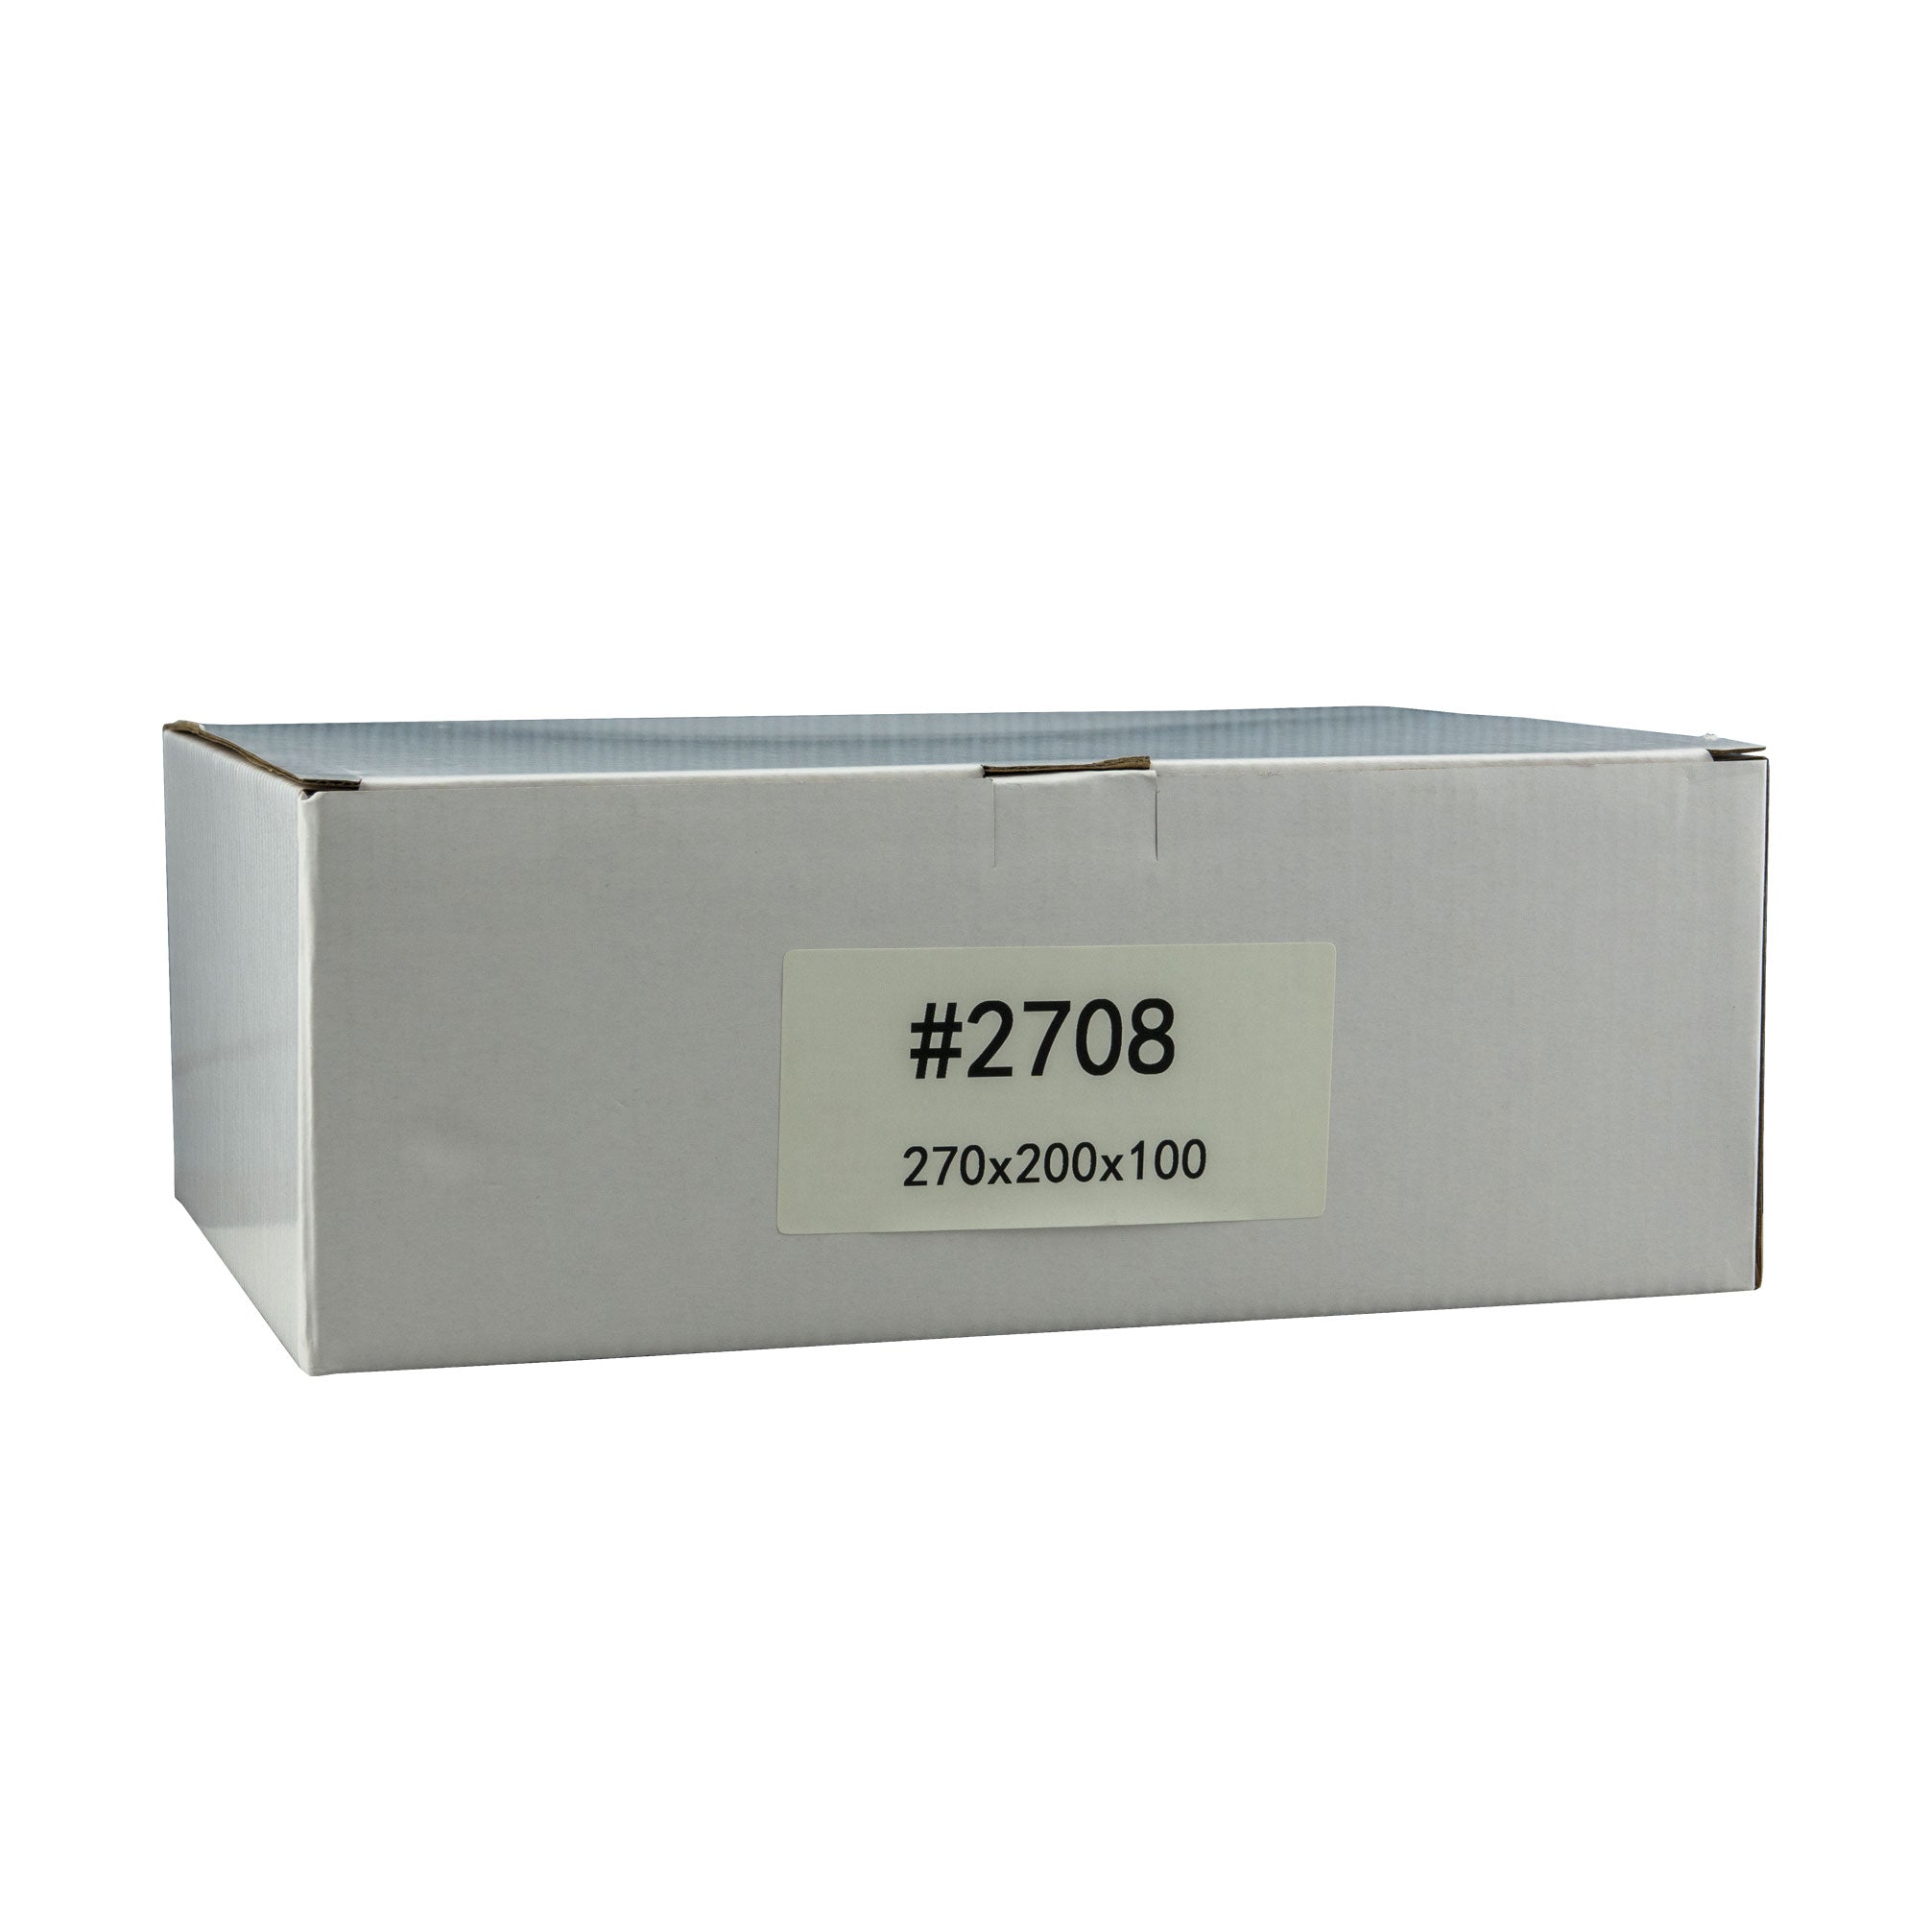 270mm x 200mm x 100mm White Carton Cardboard Shipping Box (#2708)